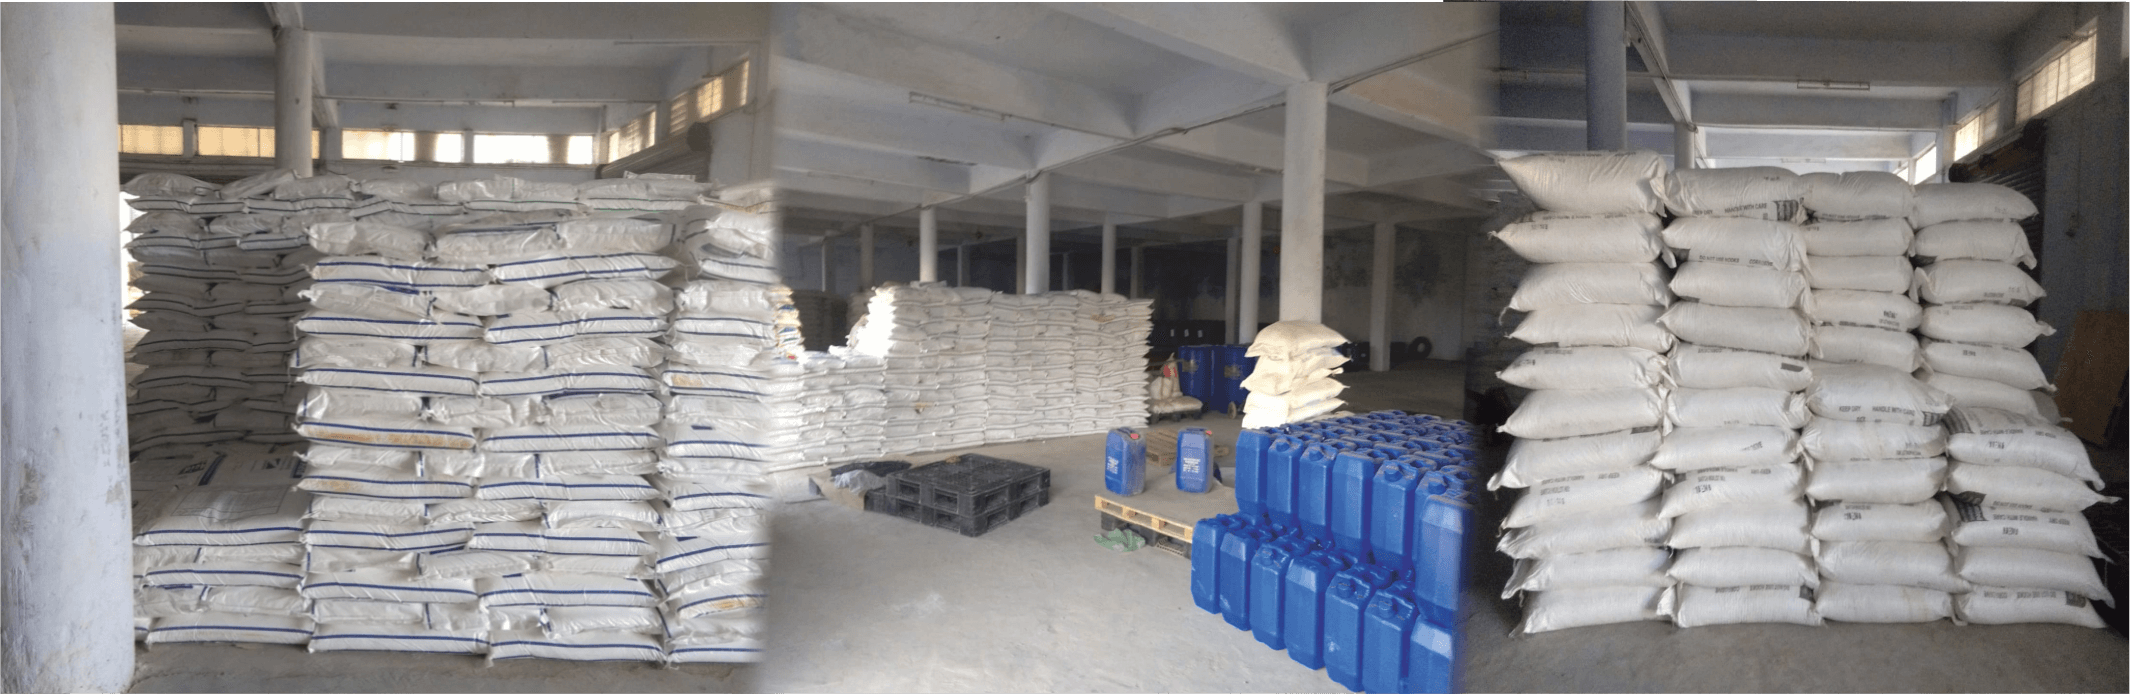 prakash chemicals agencies Vadodara office and warehouse images